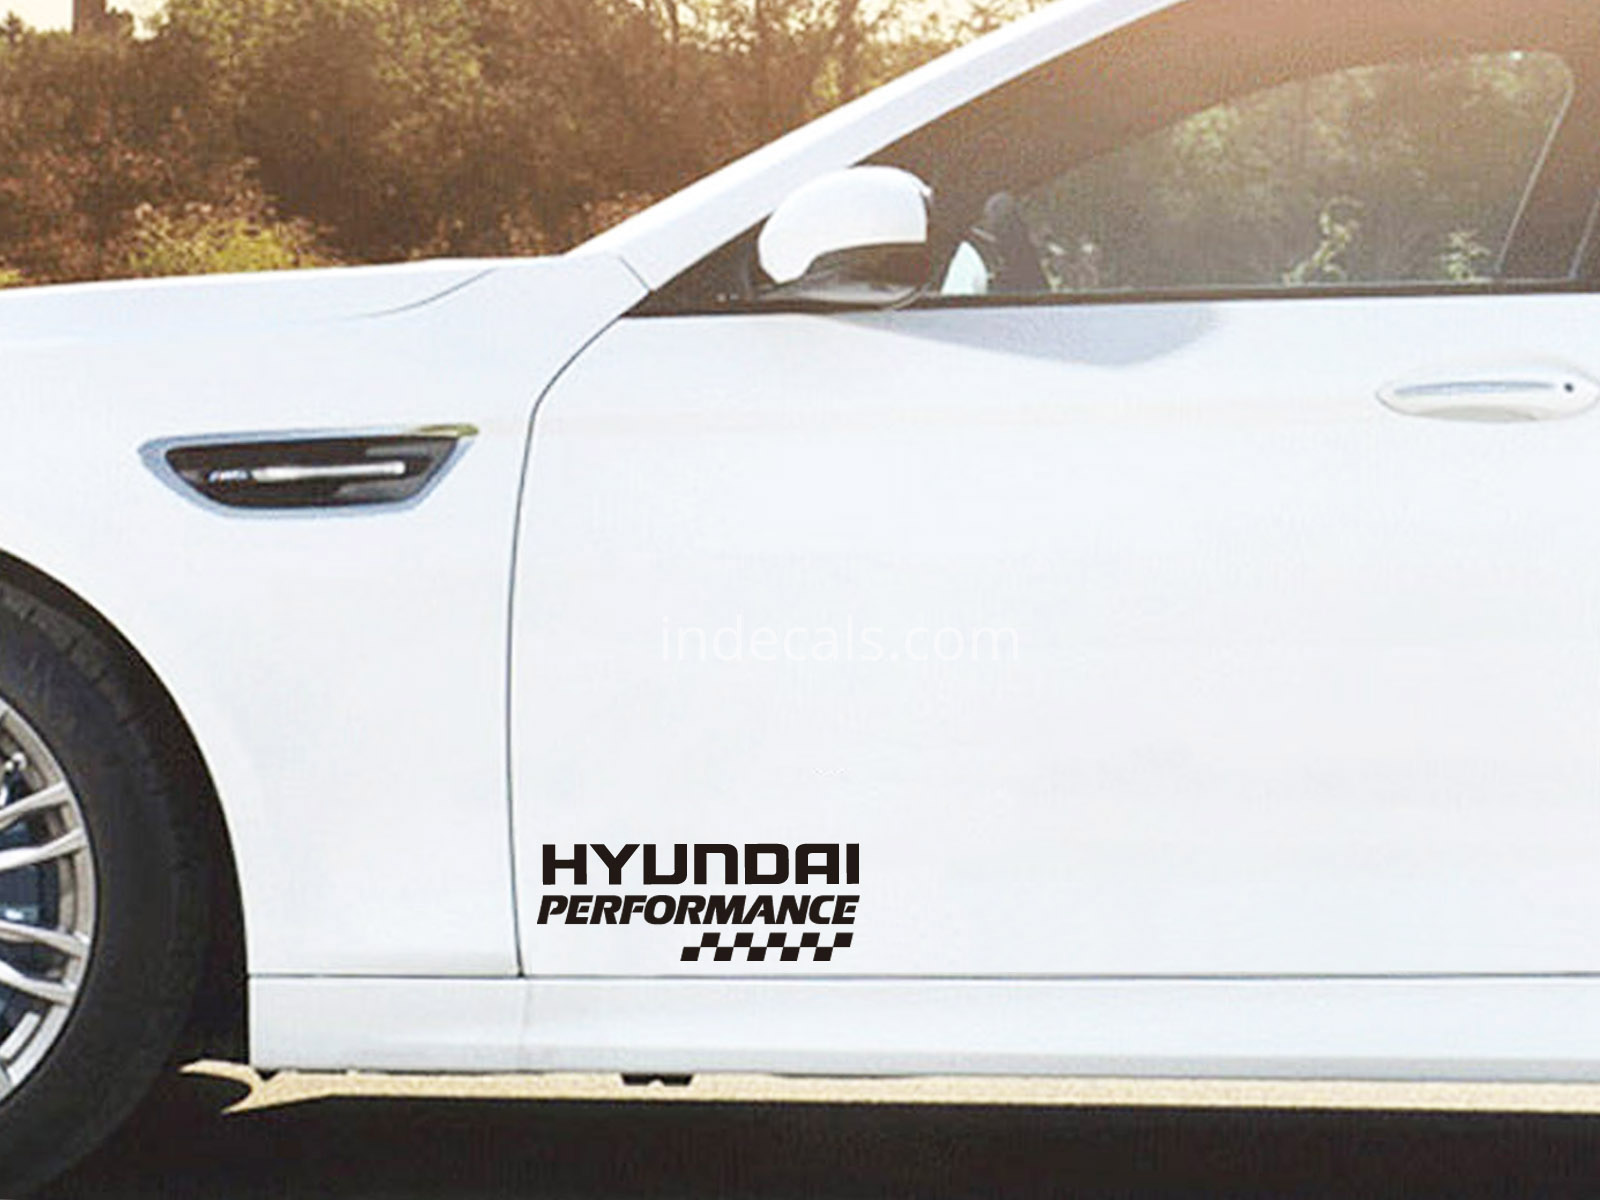 2 x Hyundai Performance Stickers for Doors - Black